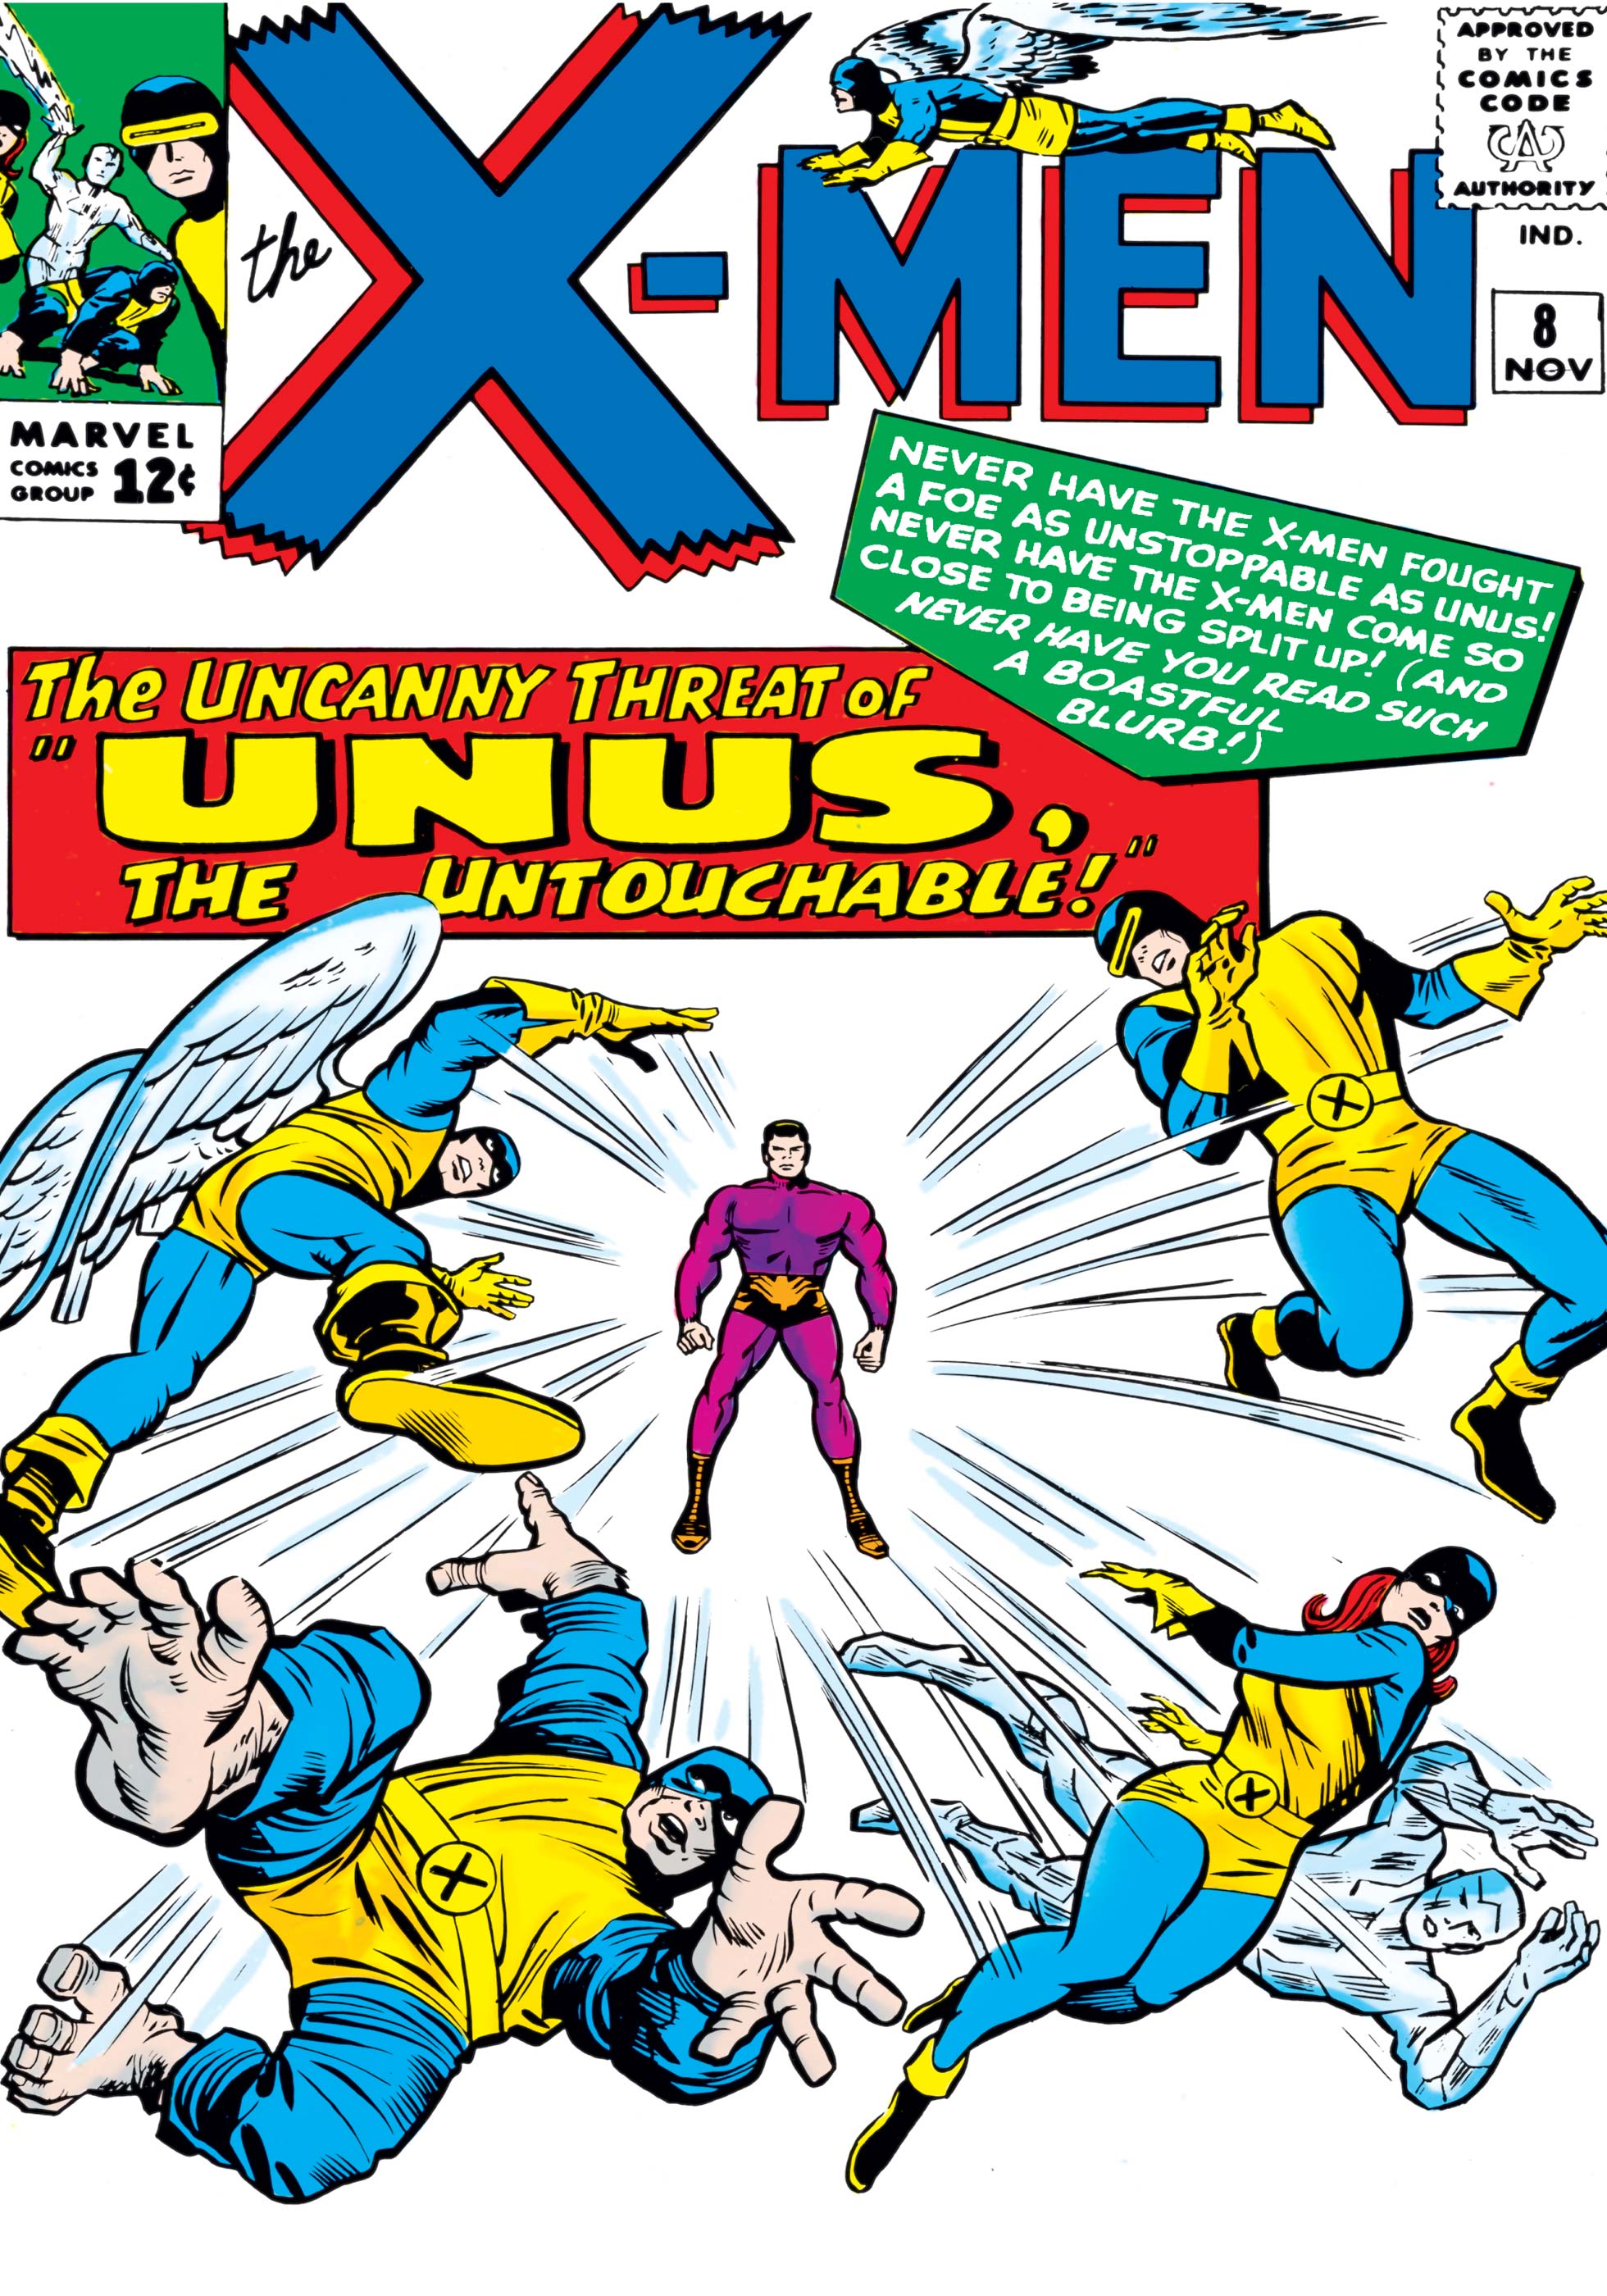 Uncanny X-Men (1963) #8